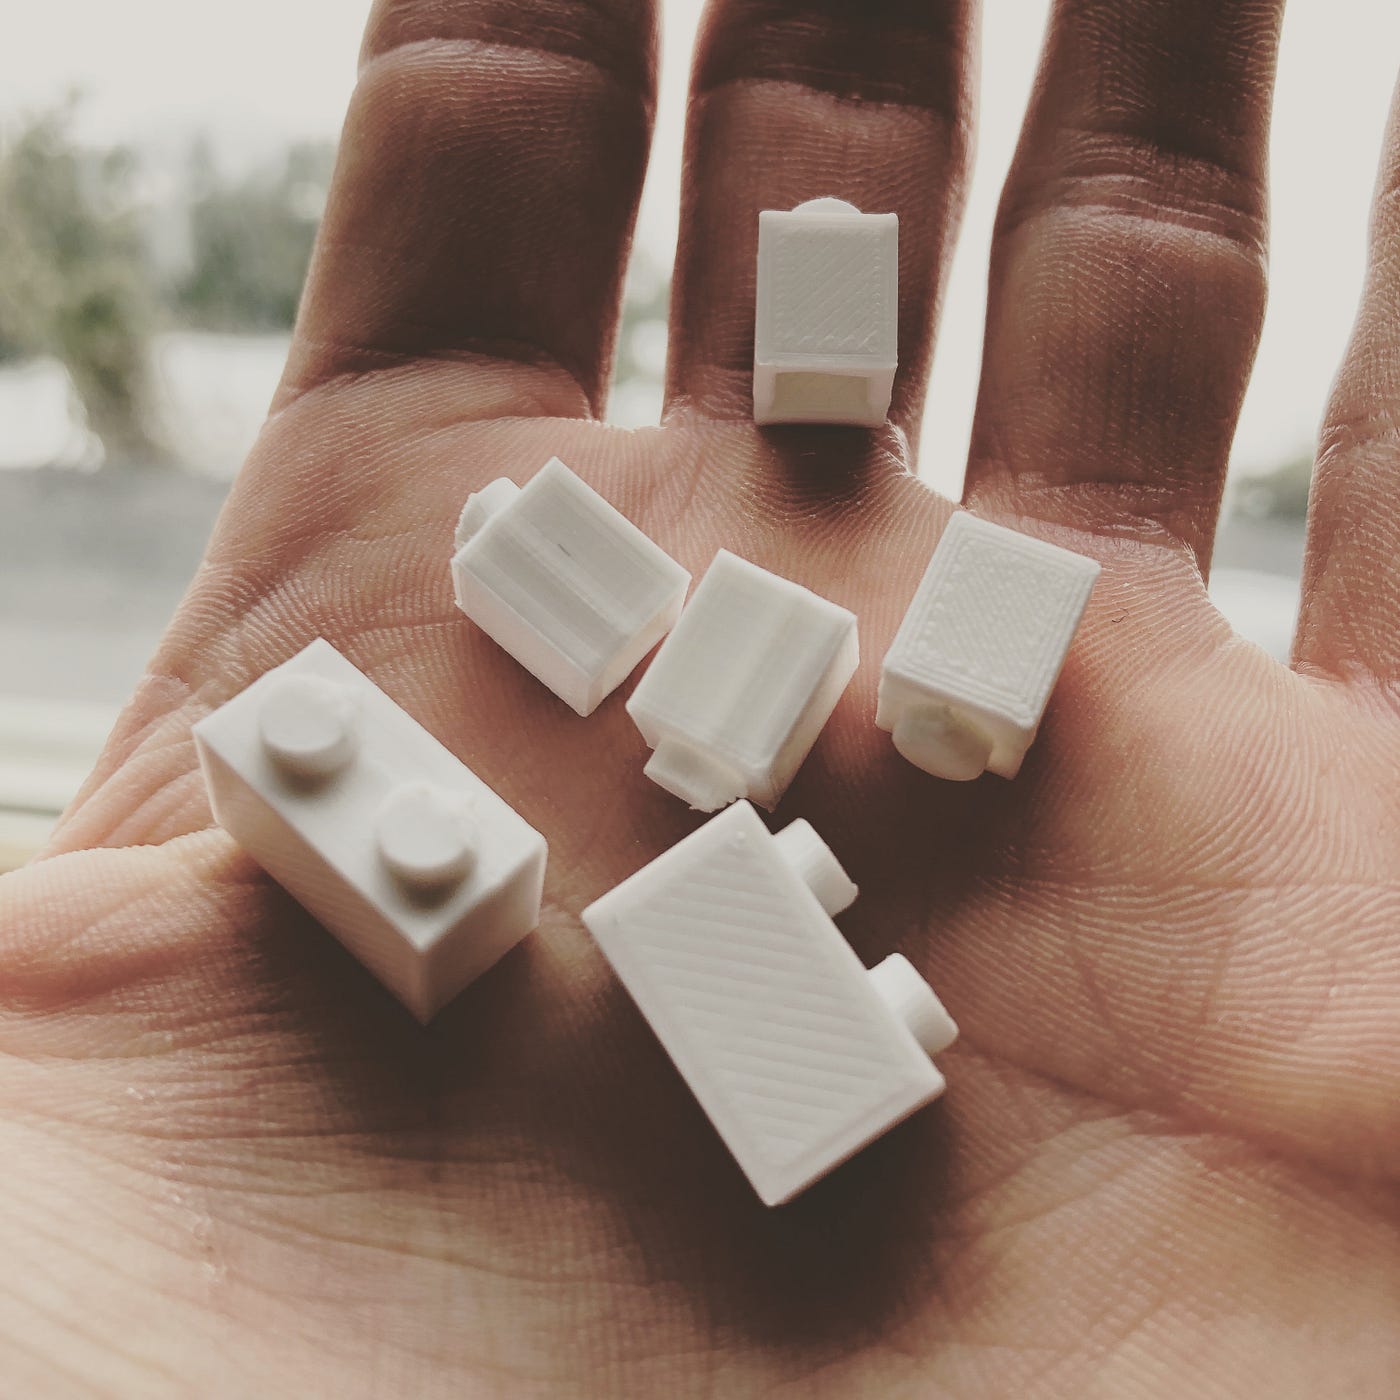 3D Printing LEGOS Successfully. I'm sitting down thinking of ideas for… |  by Luke Kemeny | Medium